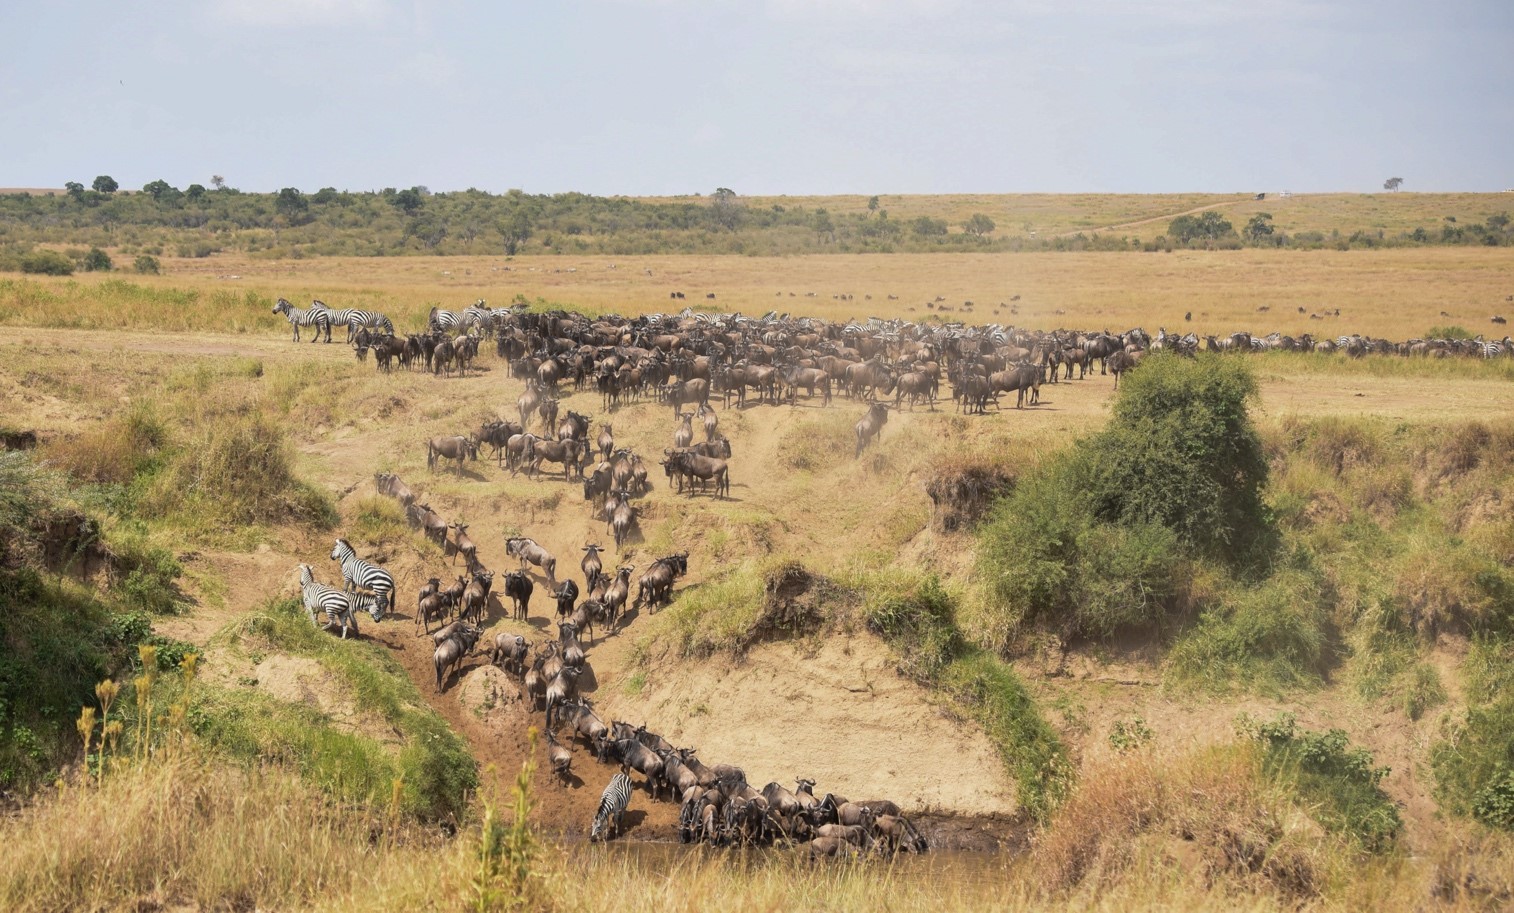 zebras and wildebeest waiting to cross